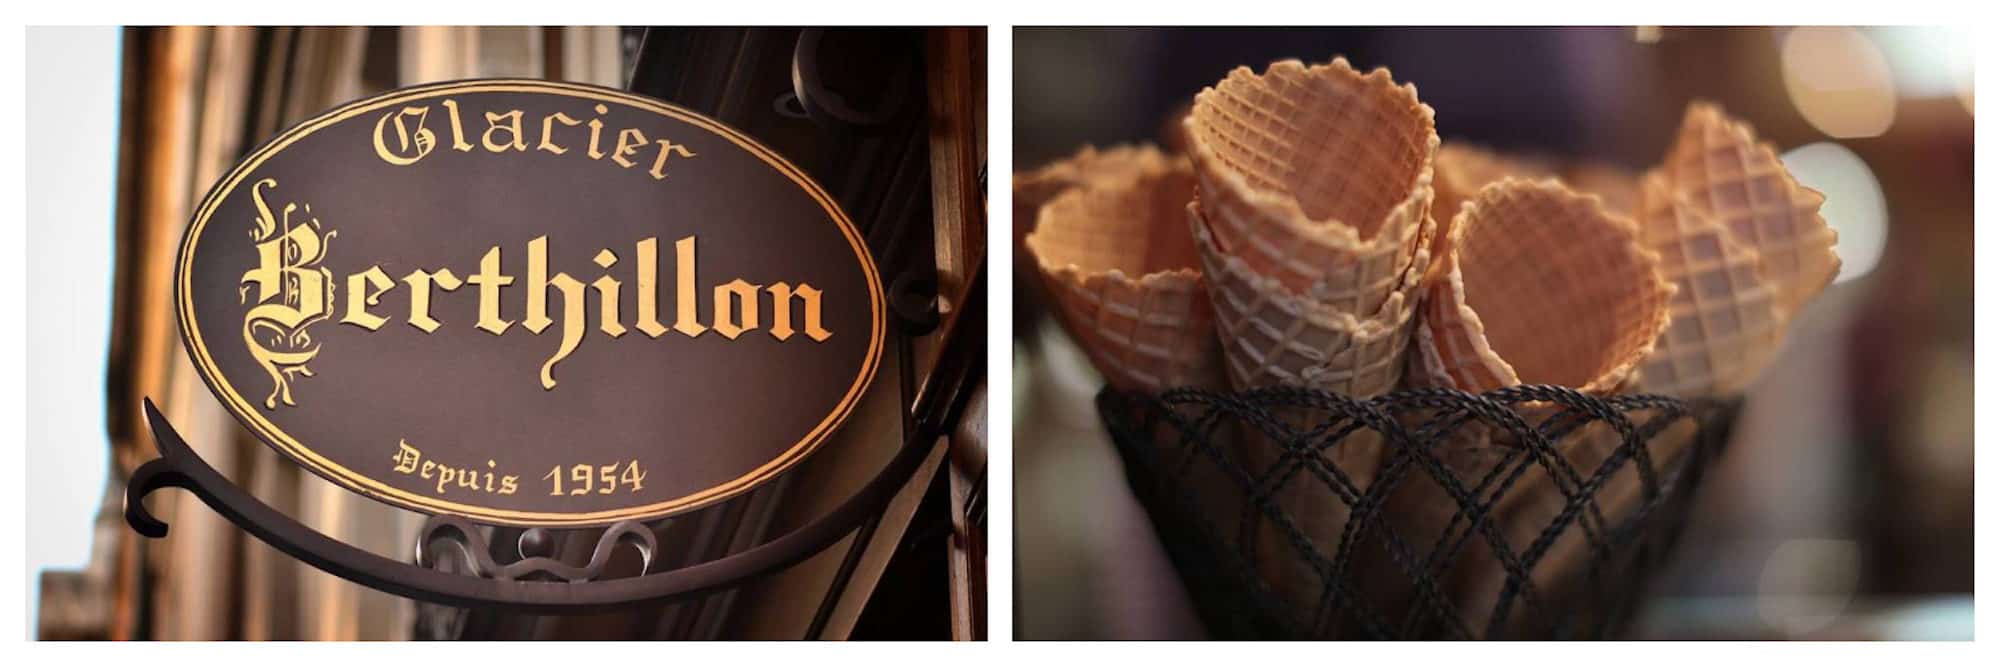 There's no place like Berthillon for ice cream in Paris (left). Delicate Berthillon ice cream cones in a wire basket (right). 